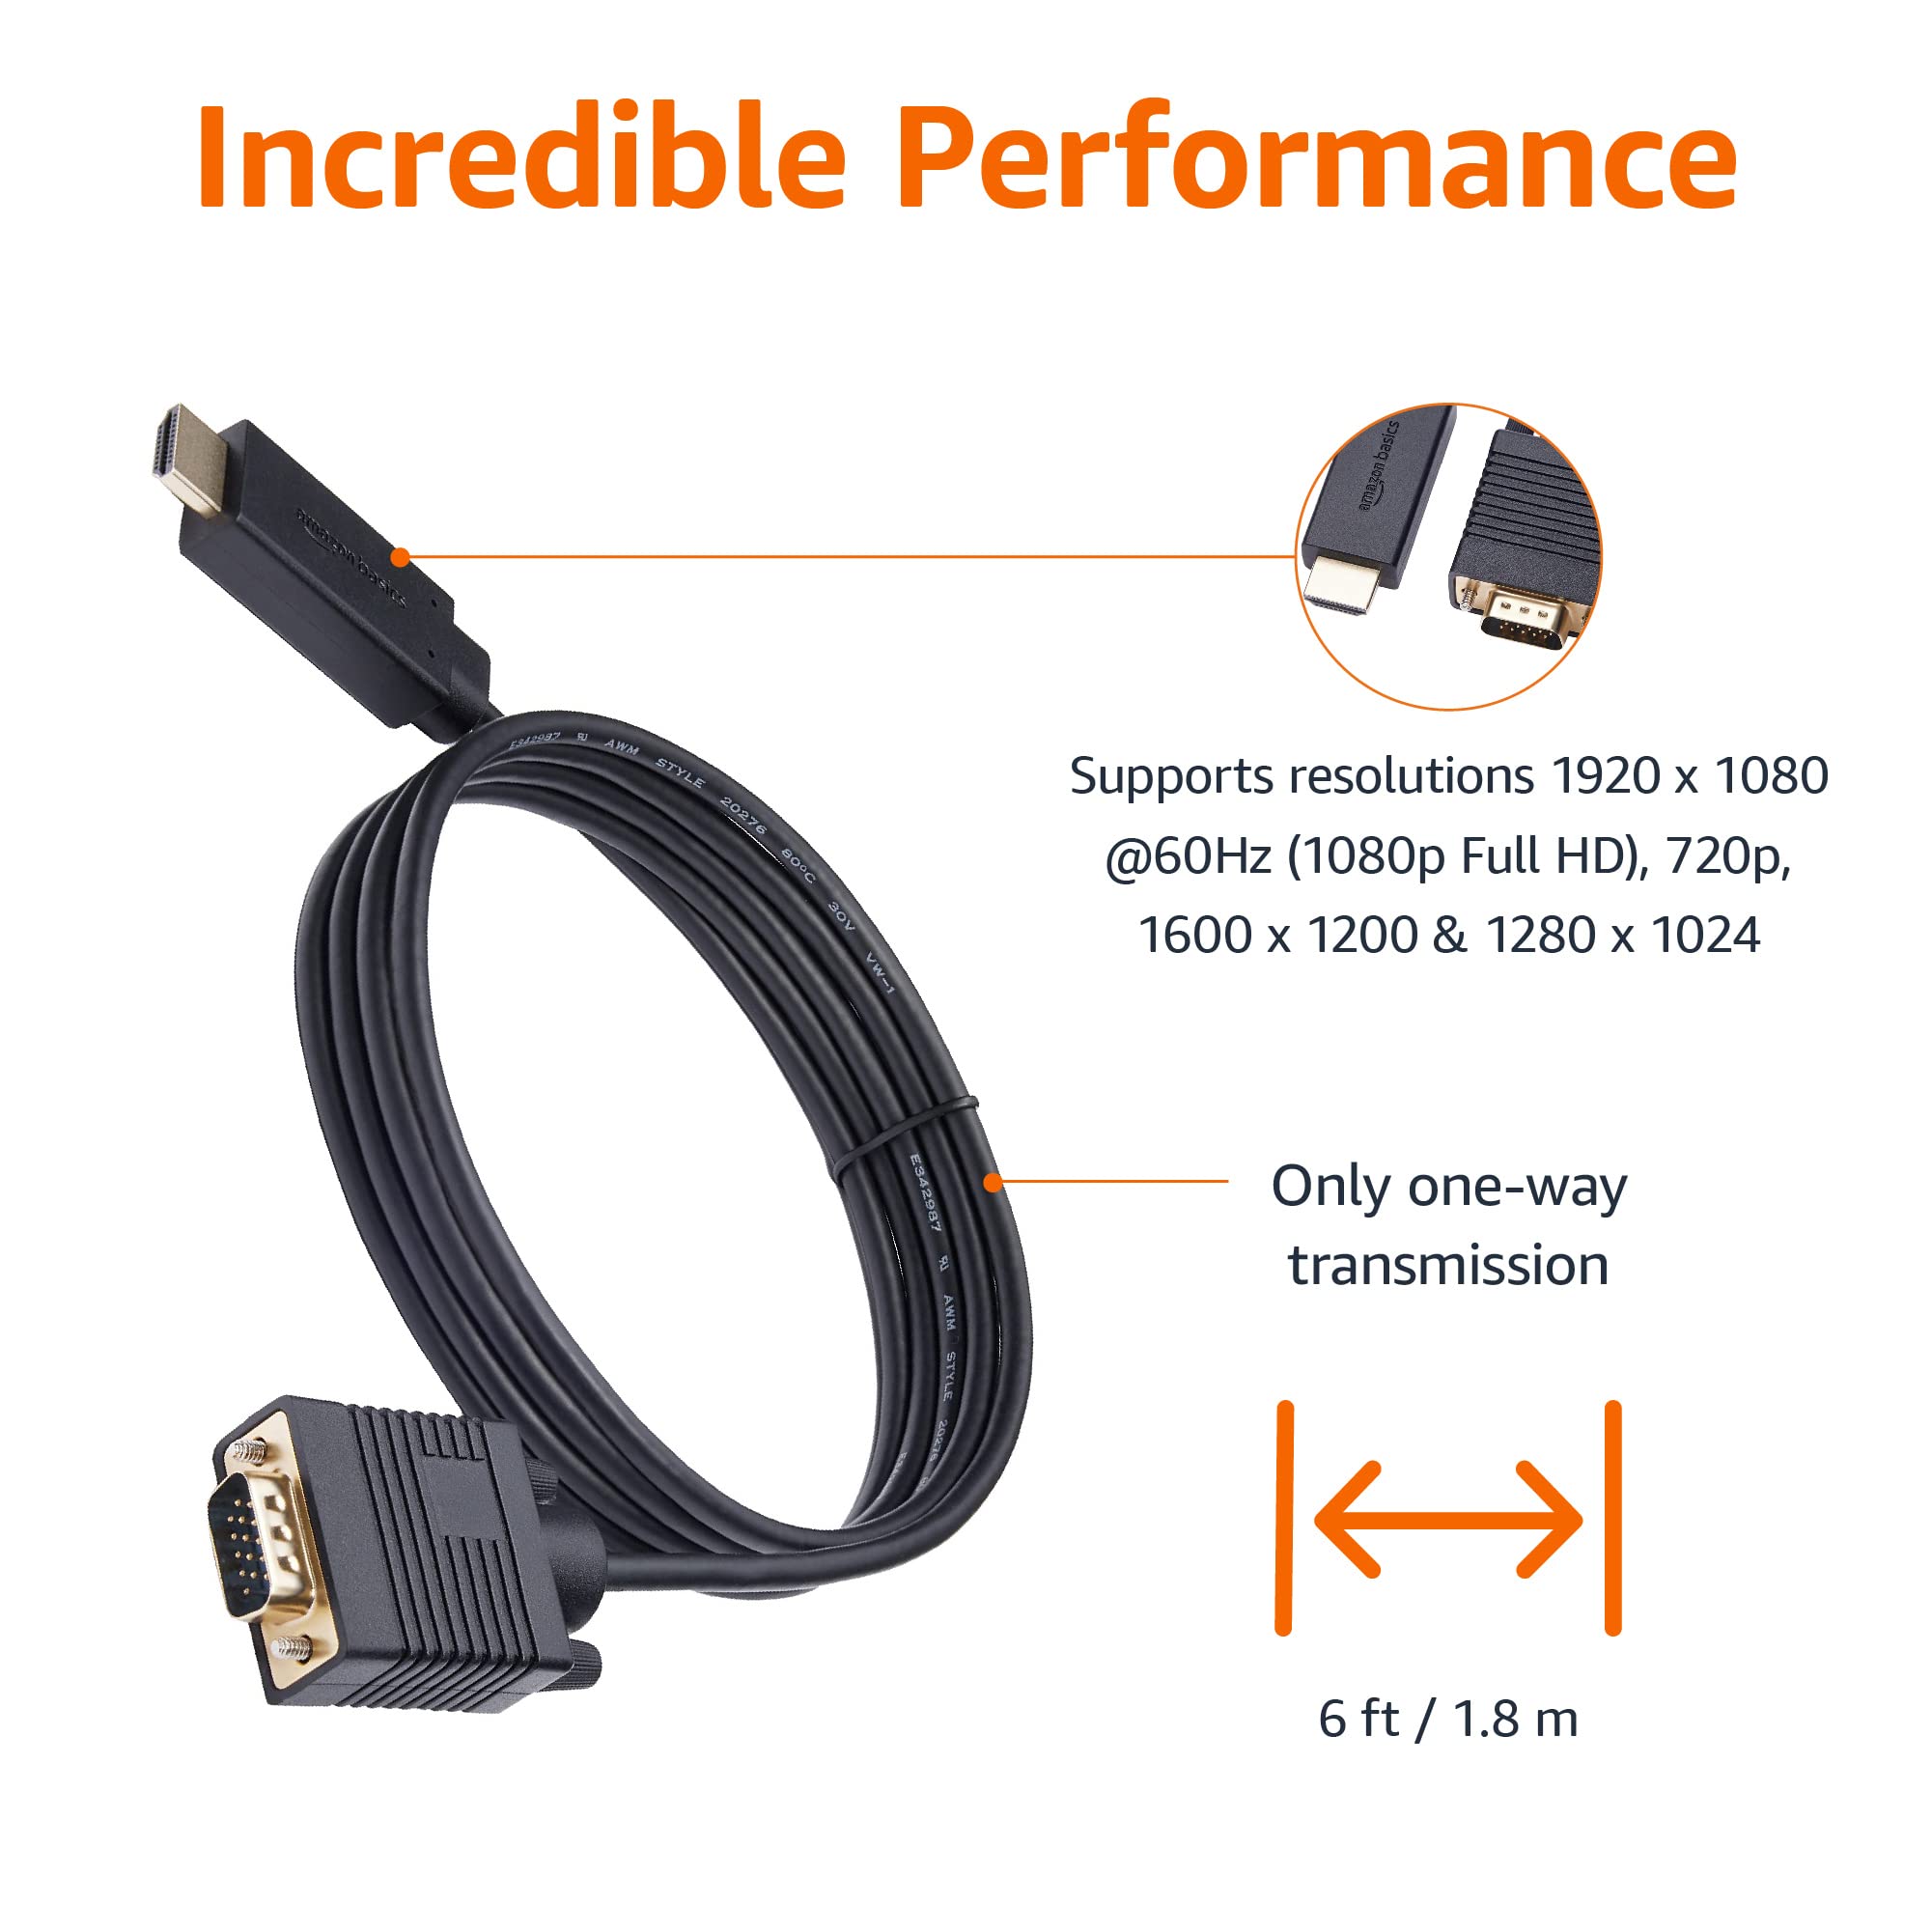 Amazon Basics Uni-Directional HDMI to VGA Cable, Gold-Plated, 6 Feet, Black